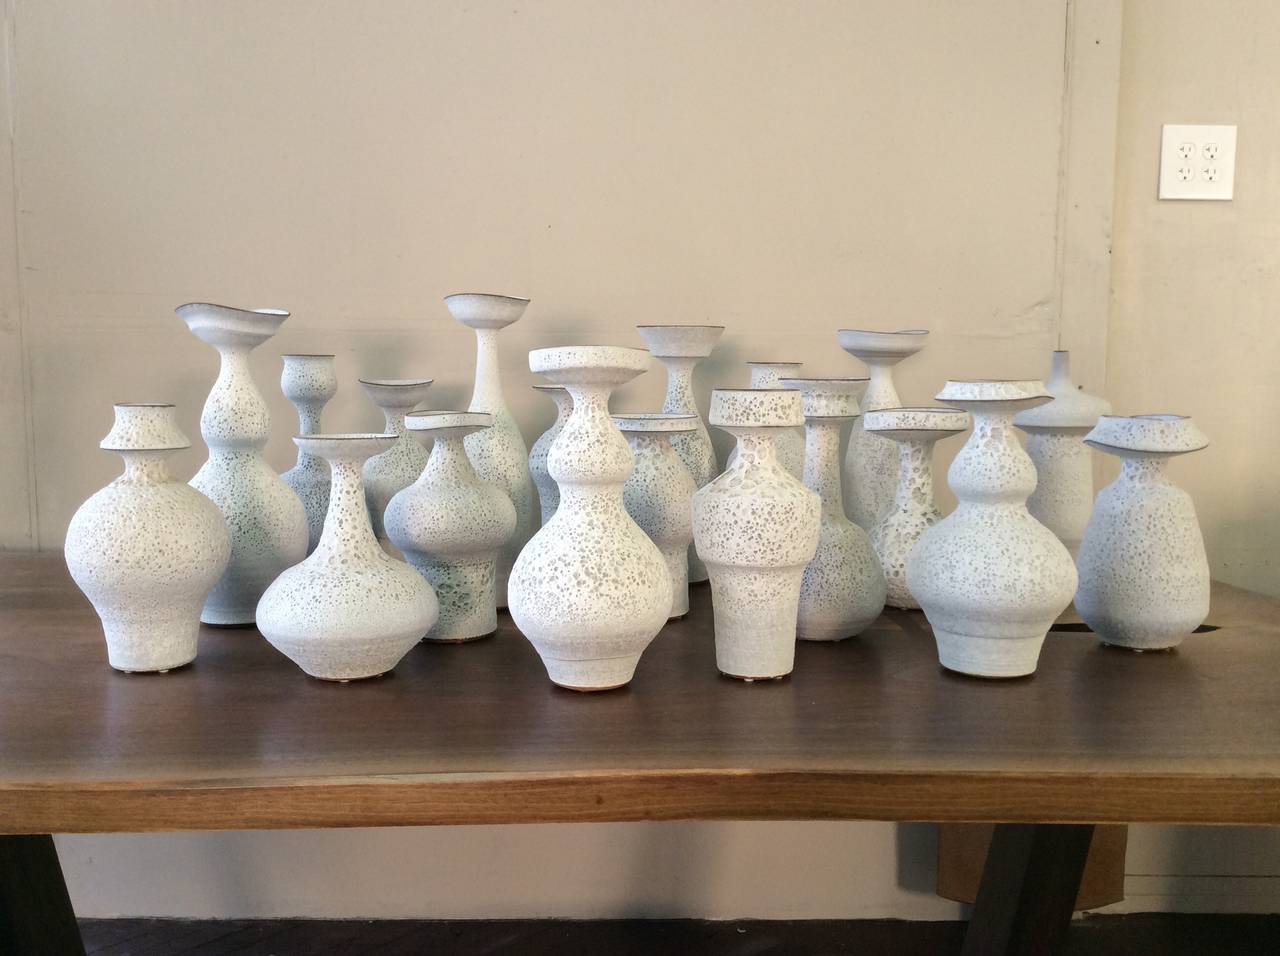 Glazed Masterful Studio Pottery Vases in a White Crater Glaze by Jeremy Briddell, 2015